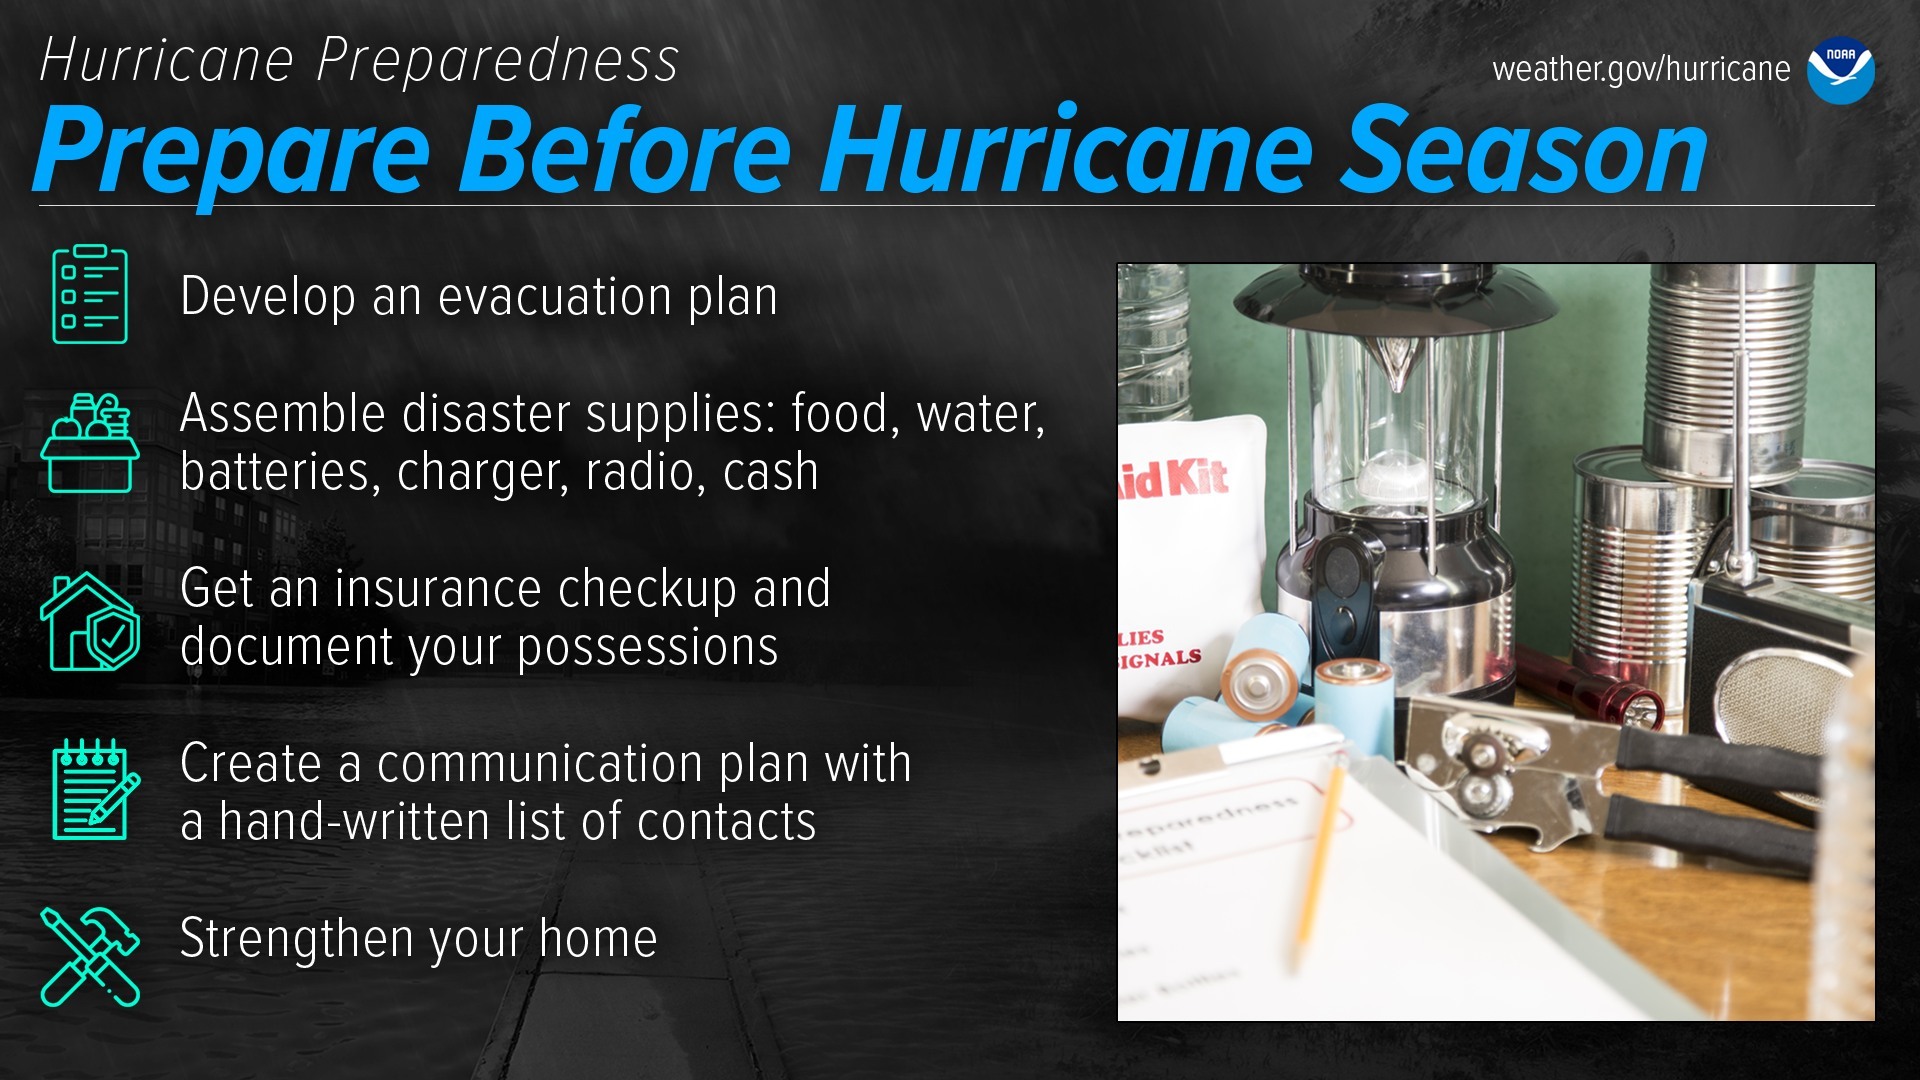 Stay Ahead of the Storm: Hurricane Preparedness Tips